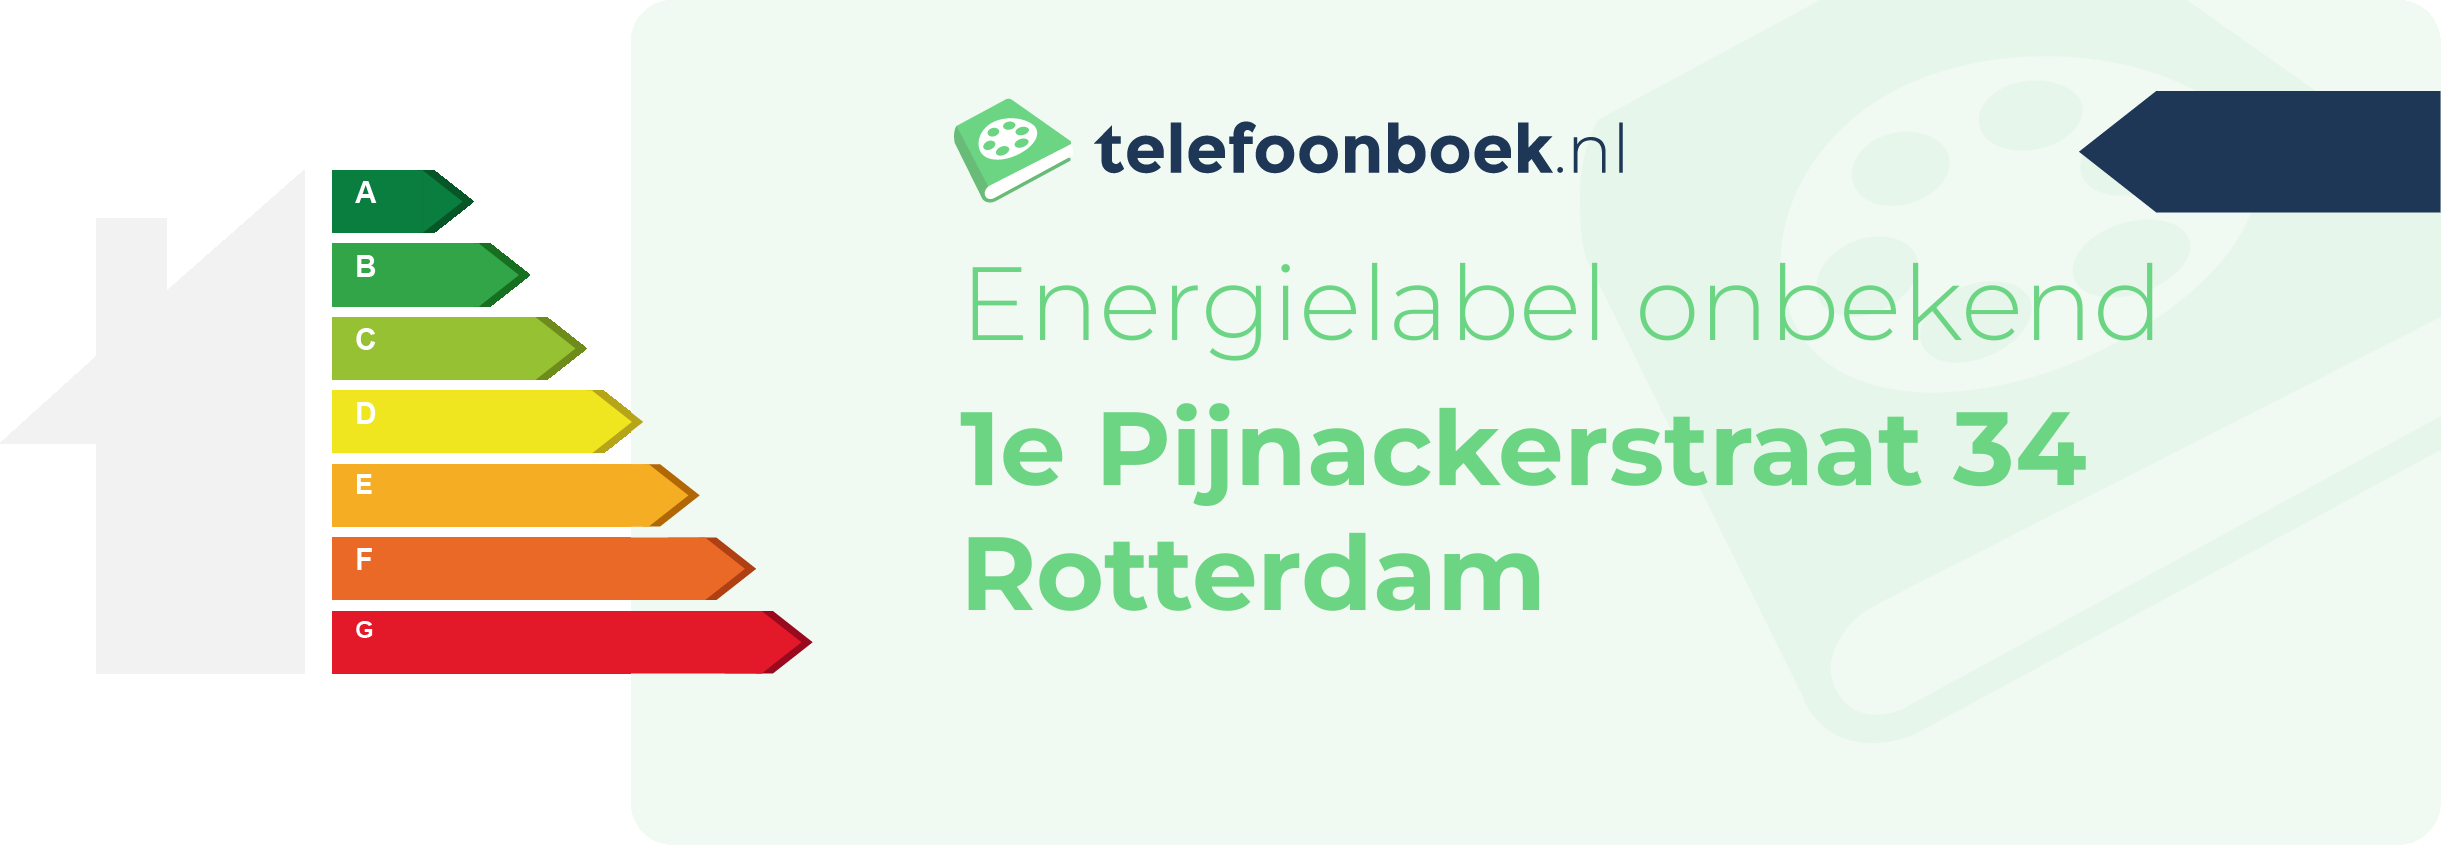 Energielabel 1e Pijnackerstraat 34 Rotterdam